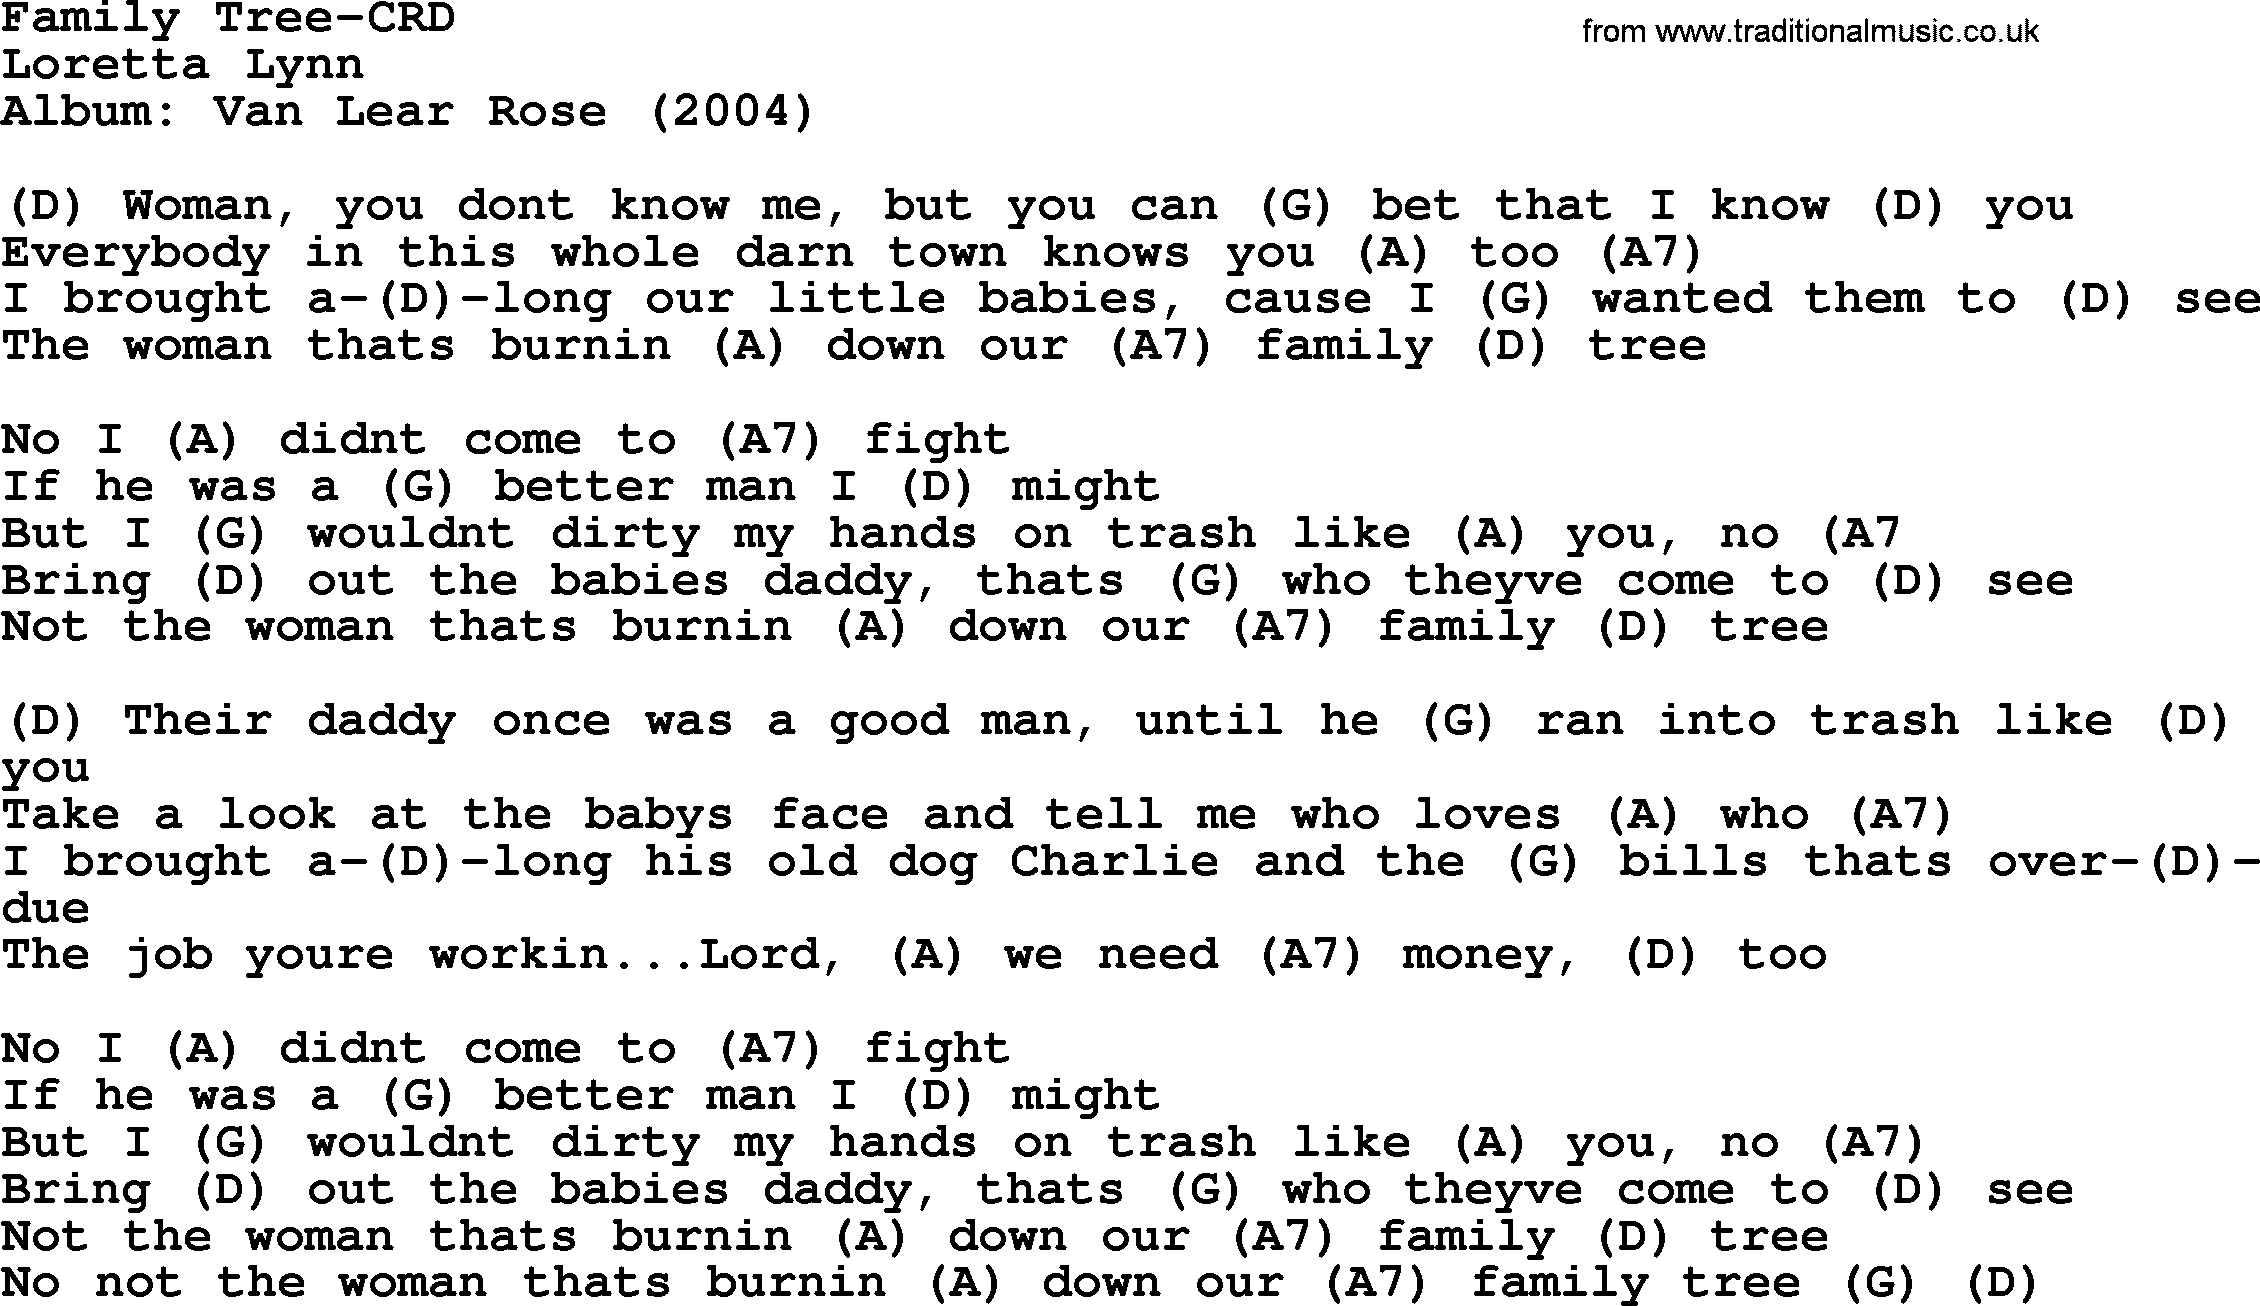 Loretta Lynn song: Family Tree lyrics and chords